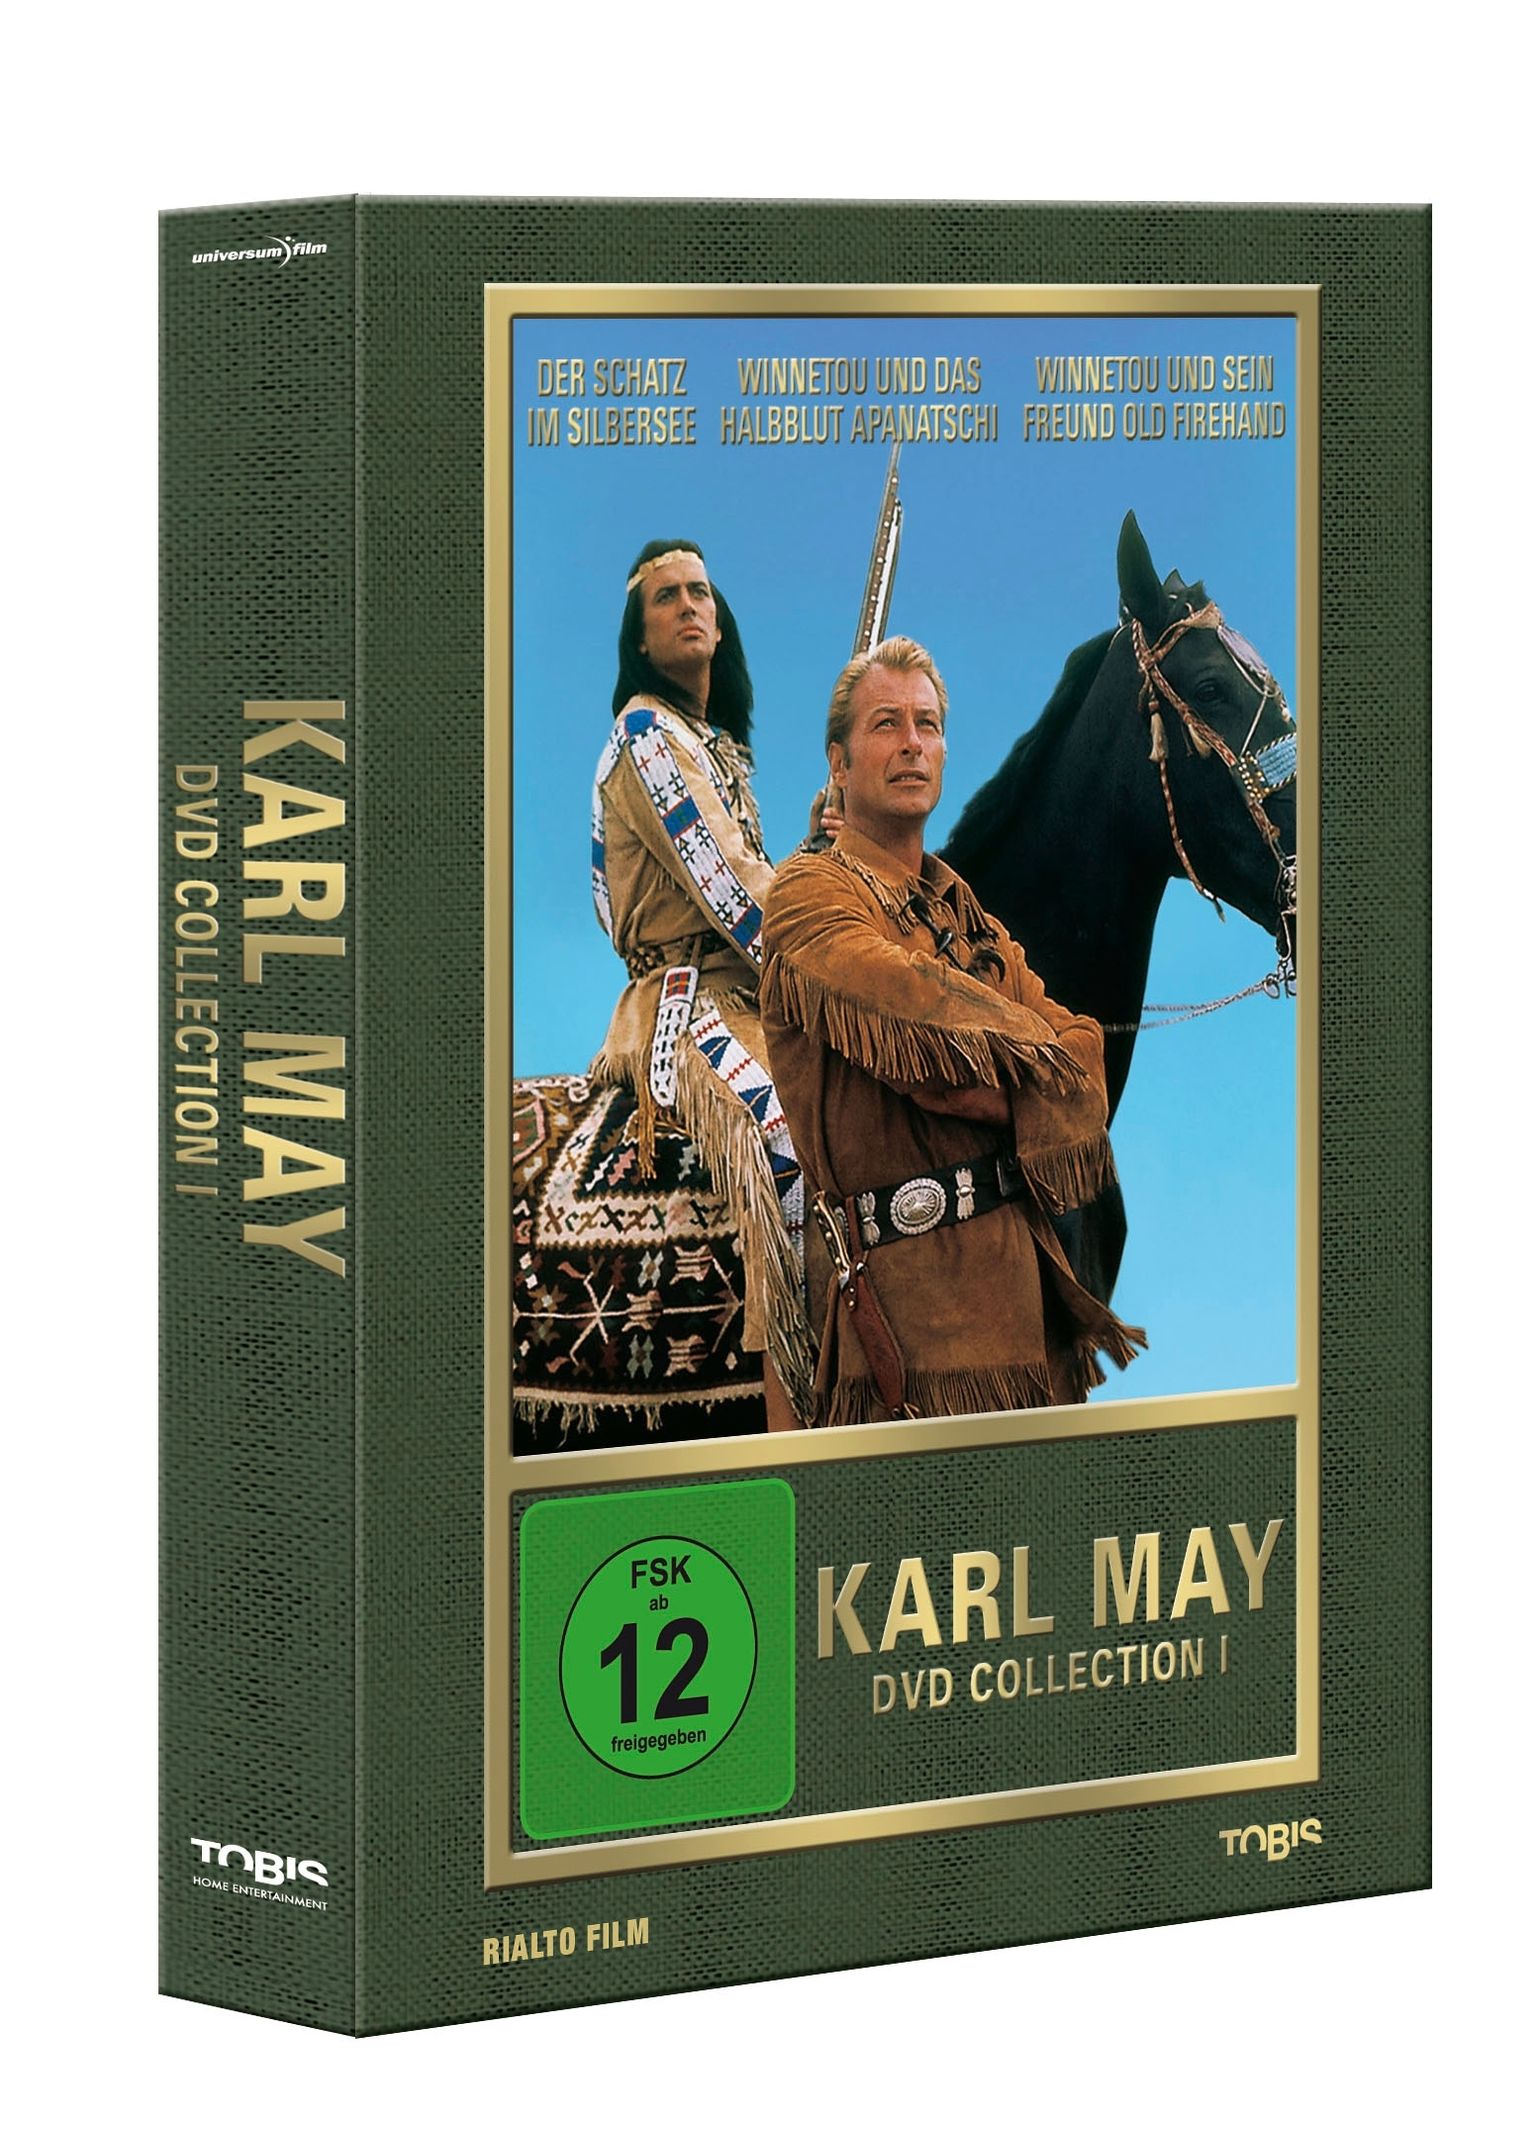 Karl May DVD Collection 1 DVD bei Weltbild.de bestellen